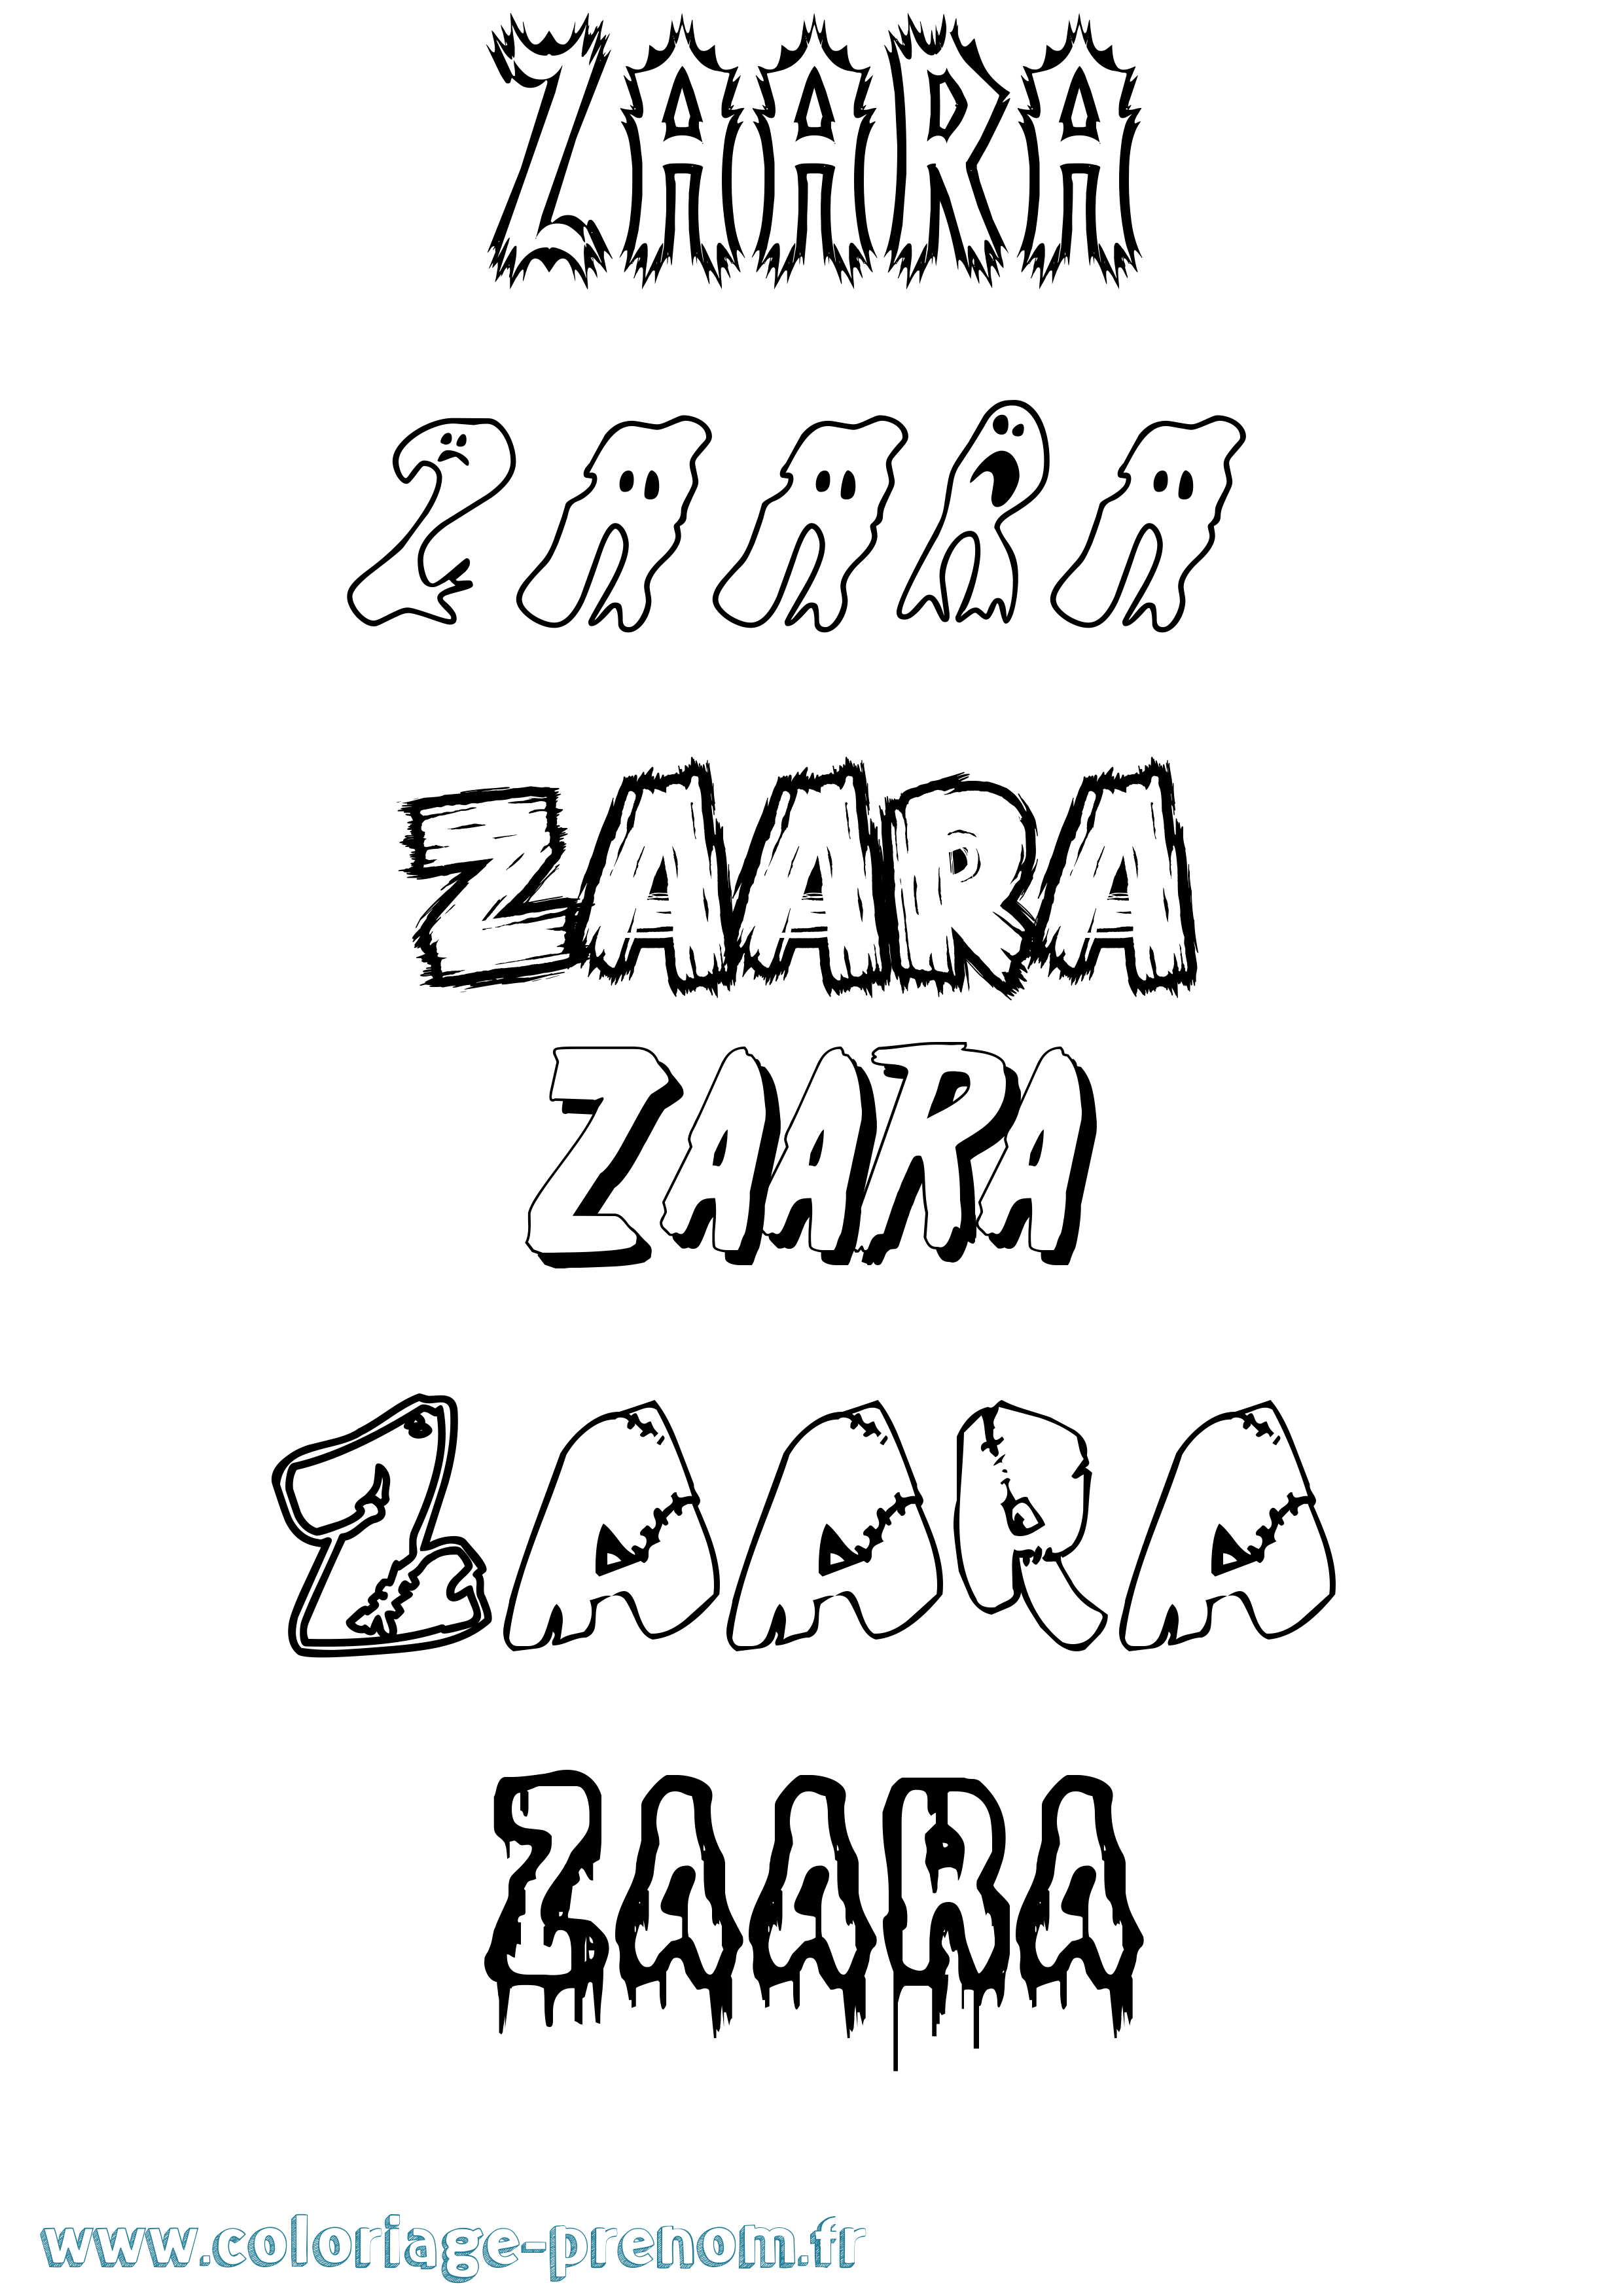 Coloriage prénom Zaara Frisson